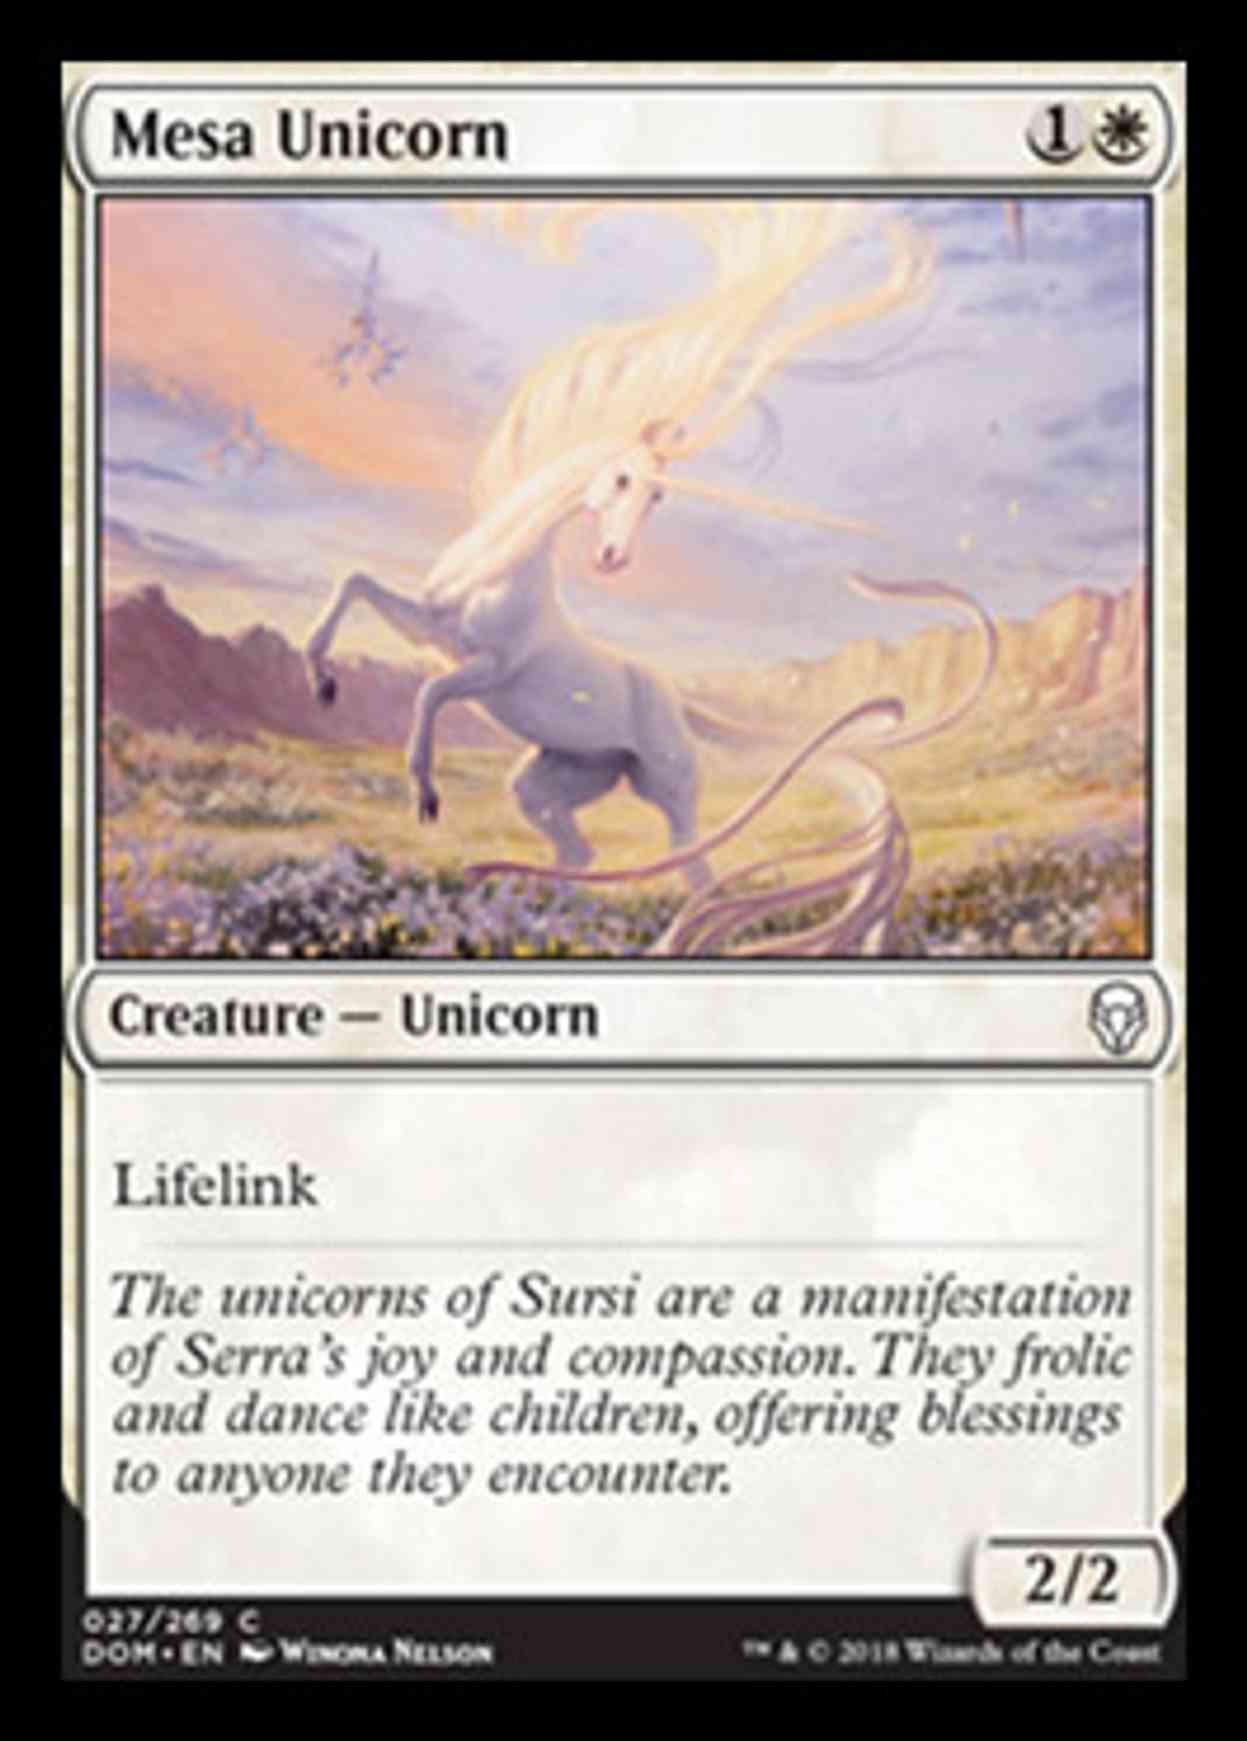 Mesa Unicorn magic card front